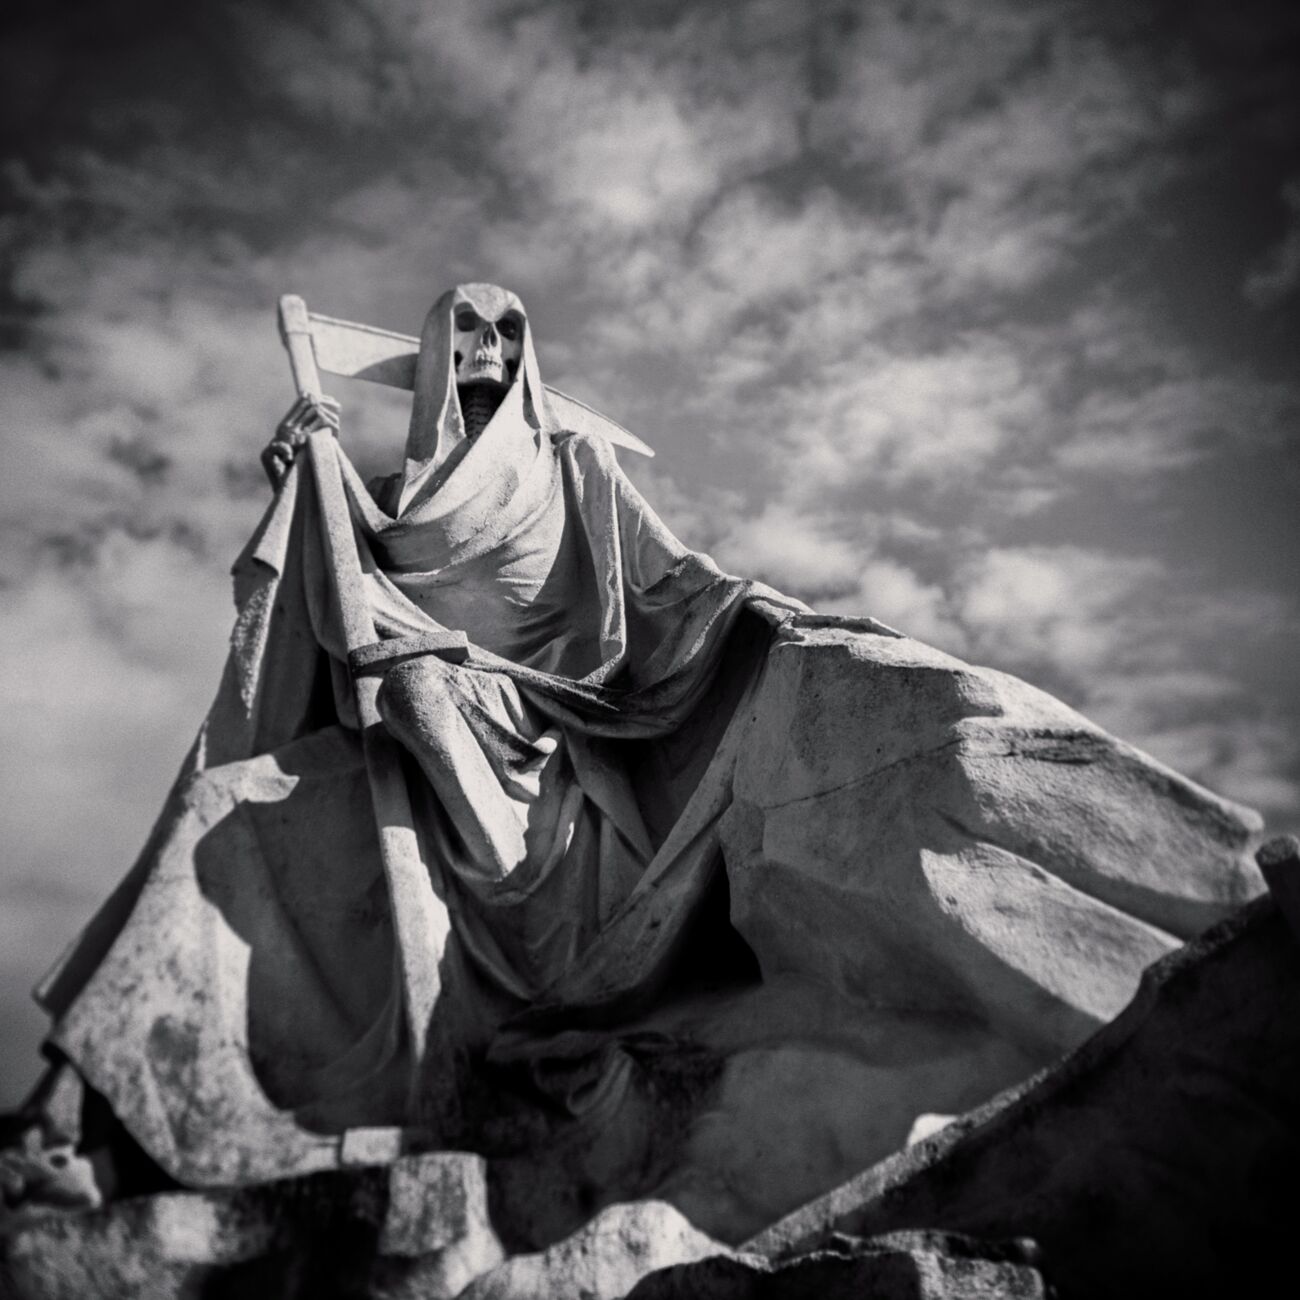 The Grim Reaper, Etude 1, Chartreuse Cemetery, Bordeaux, France. April 2010. Ref-11434 - Denis Olivier Photography